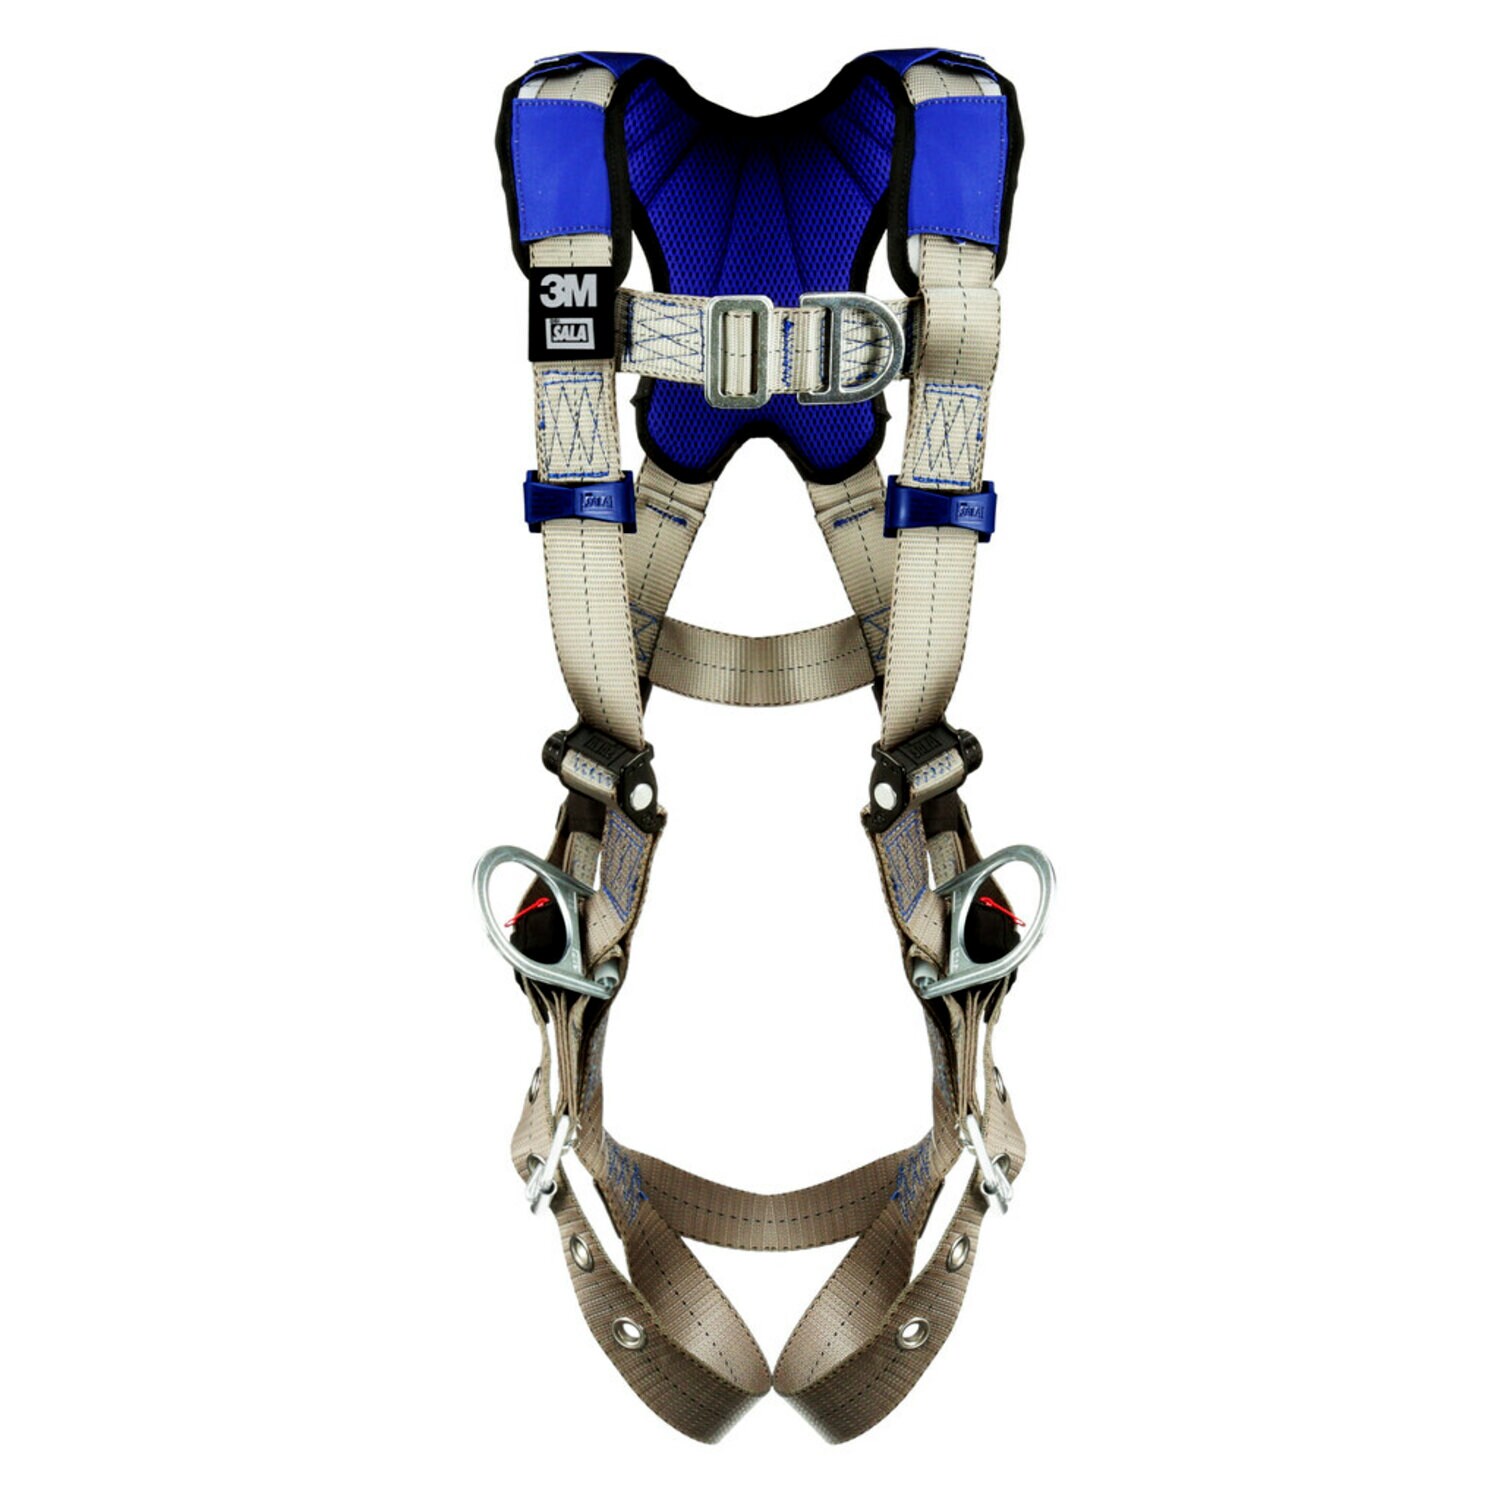 7012817465 - 3M DBI-SALA ExoFit X100 Comfort Vest Climbing/Positioning Safety Harness 1401018, X-Large